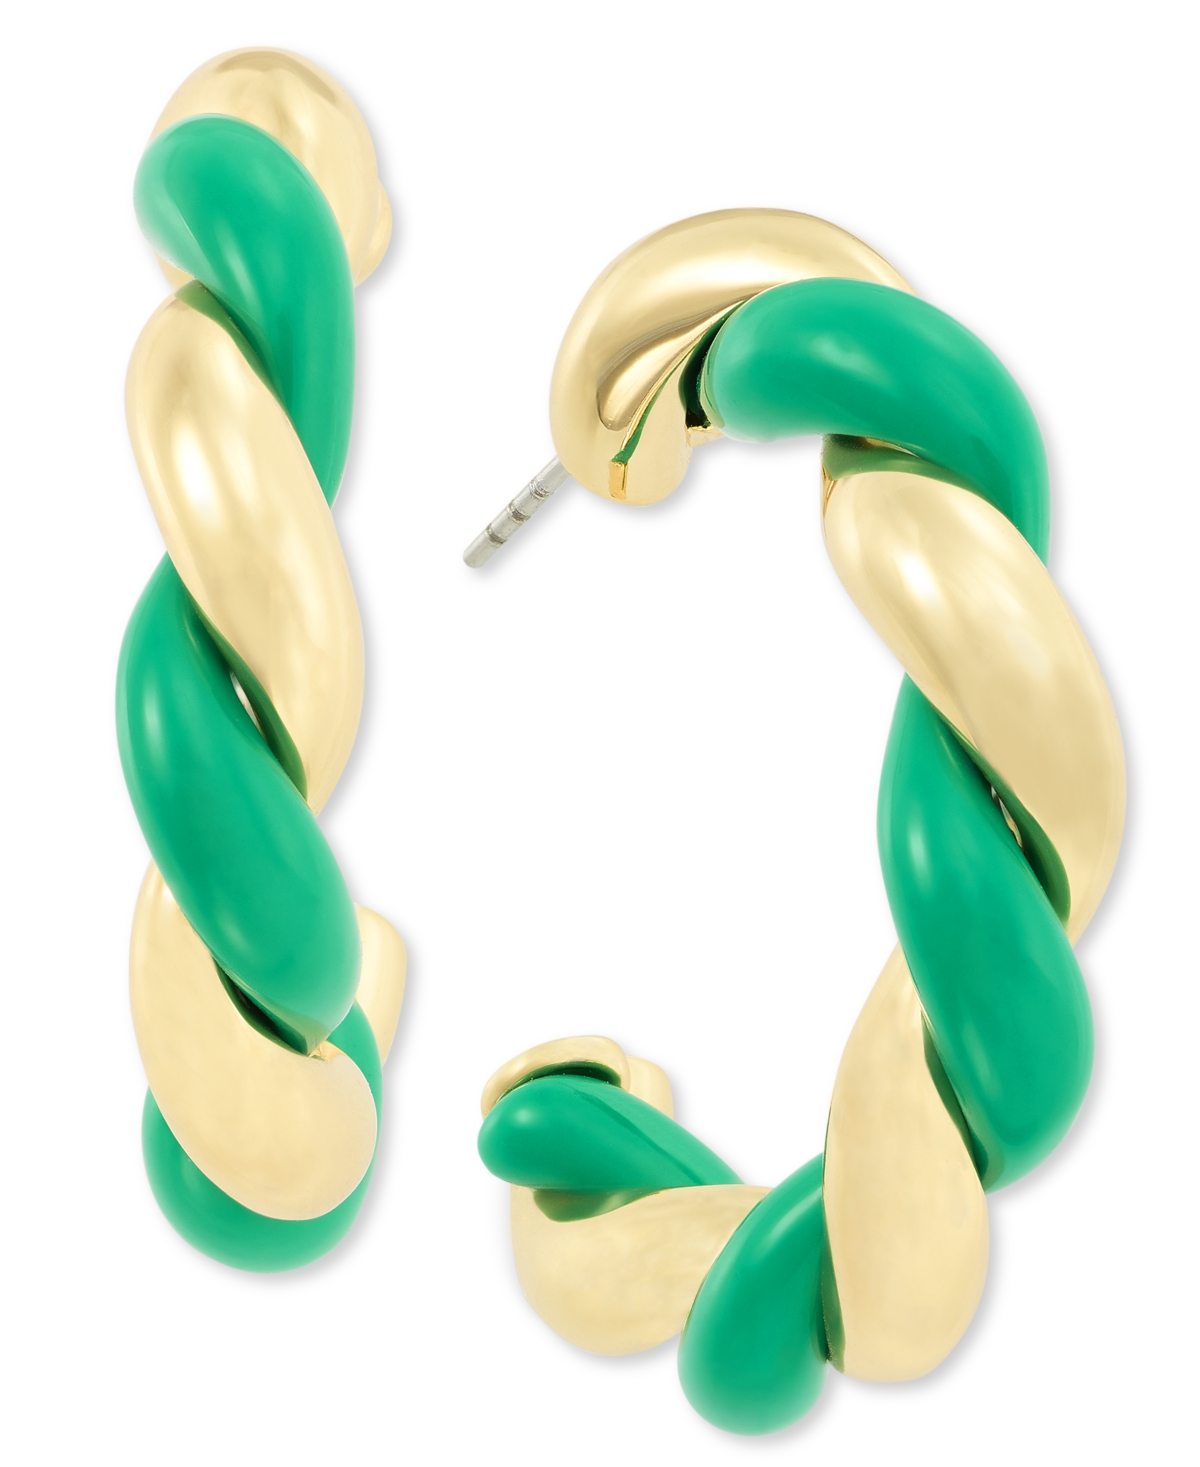 Gold-Tone Swirl Medium Hoop Earrings, 1.2", Created for Macy's - Black